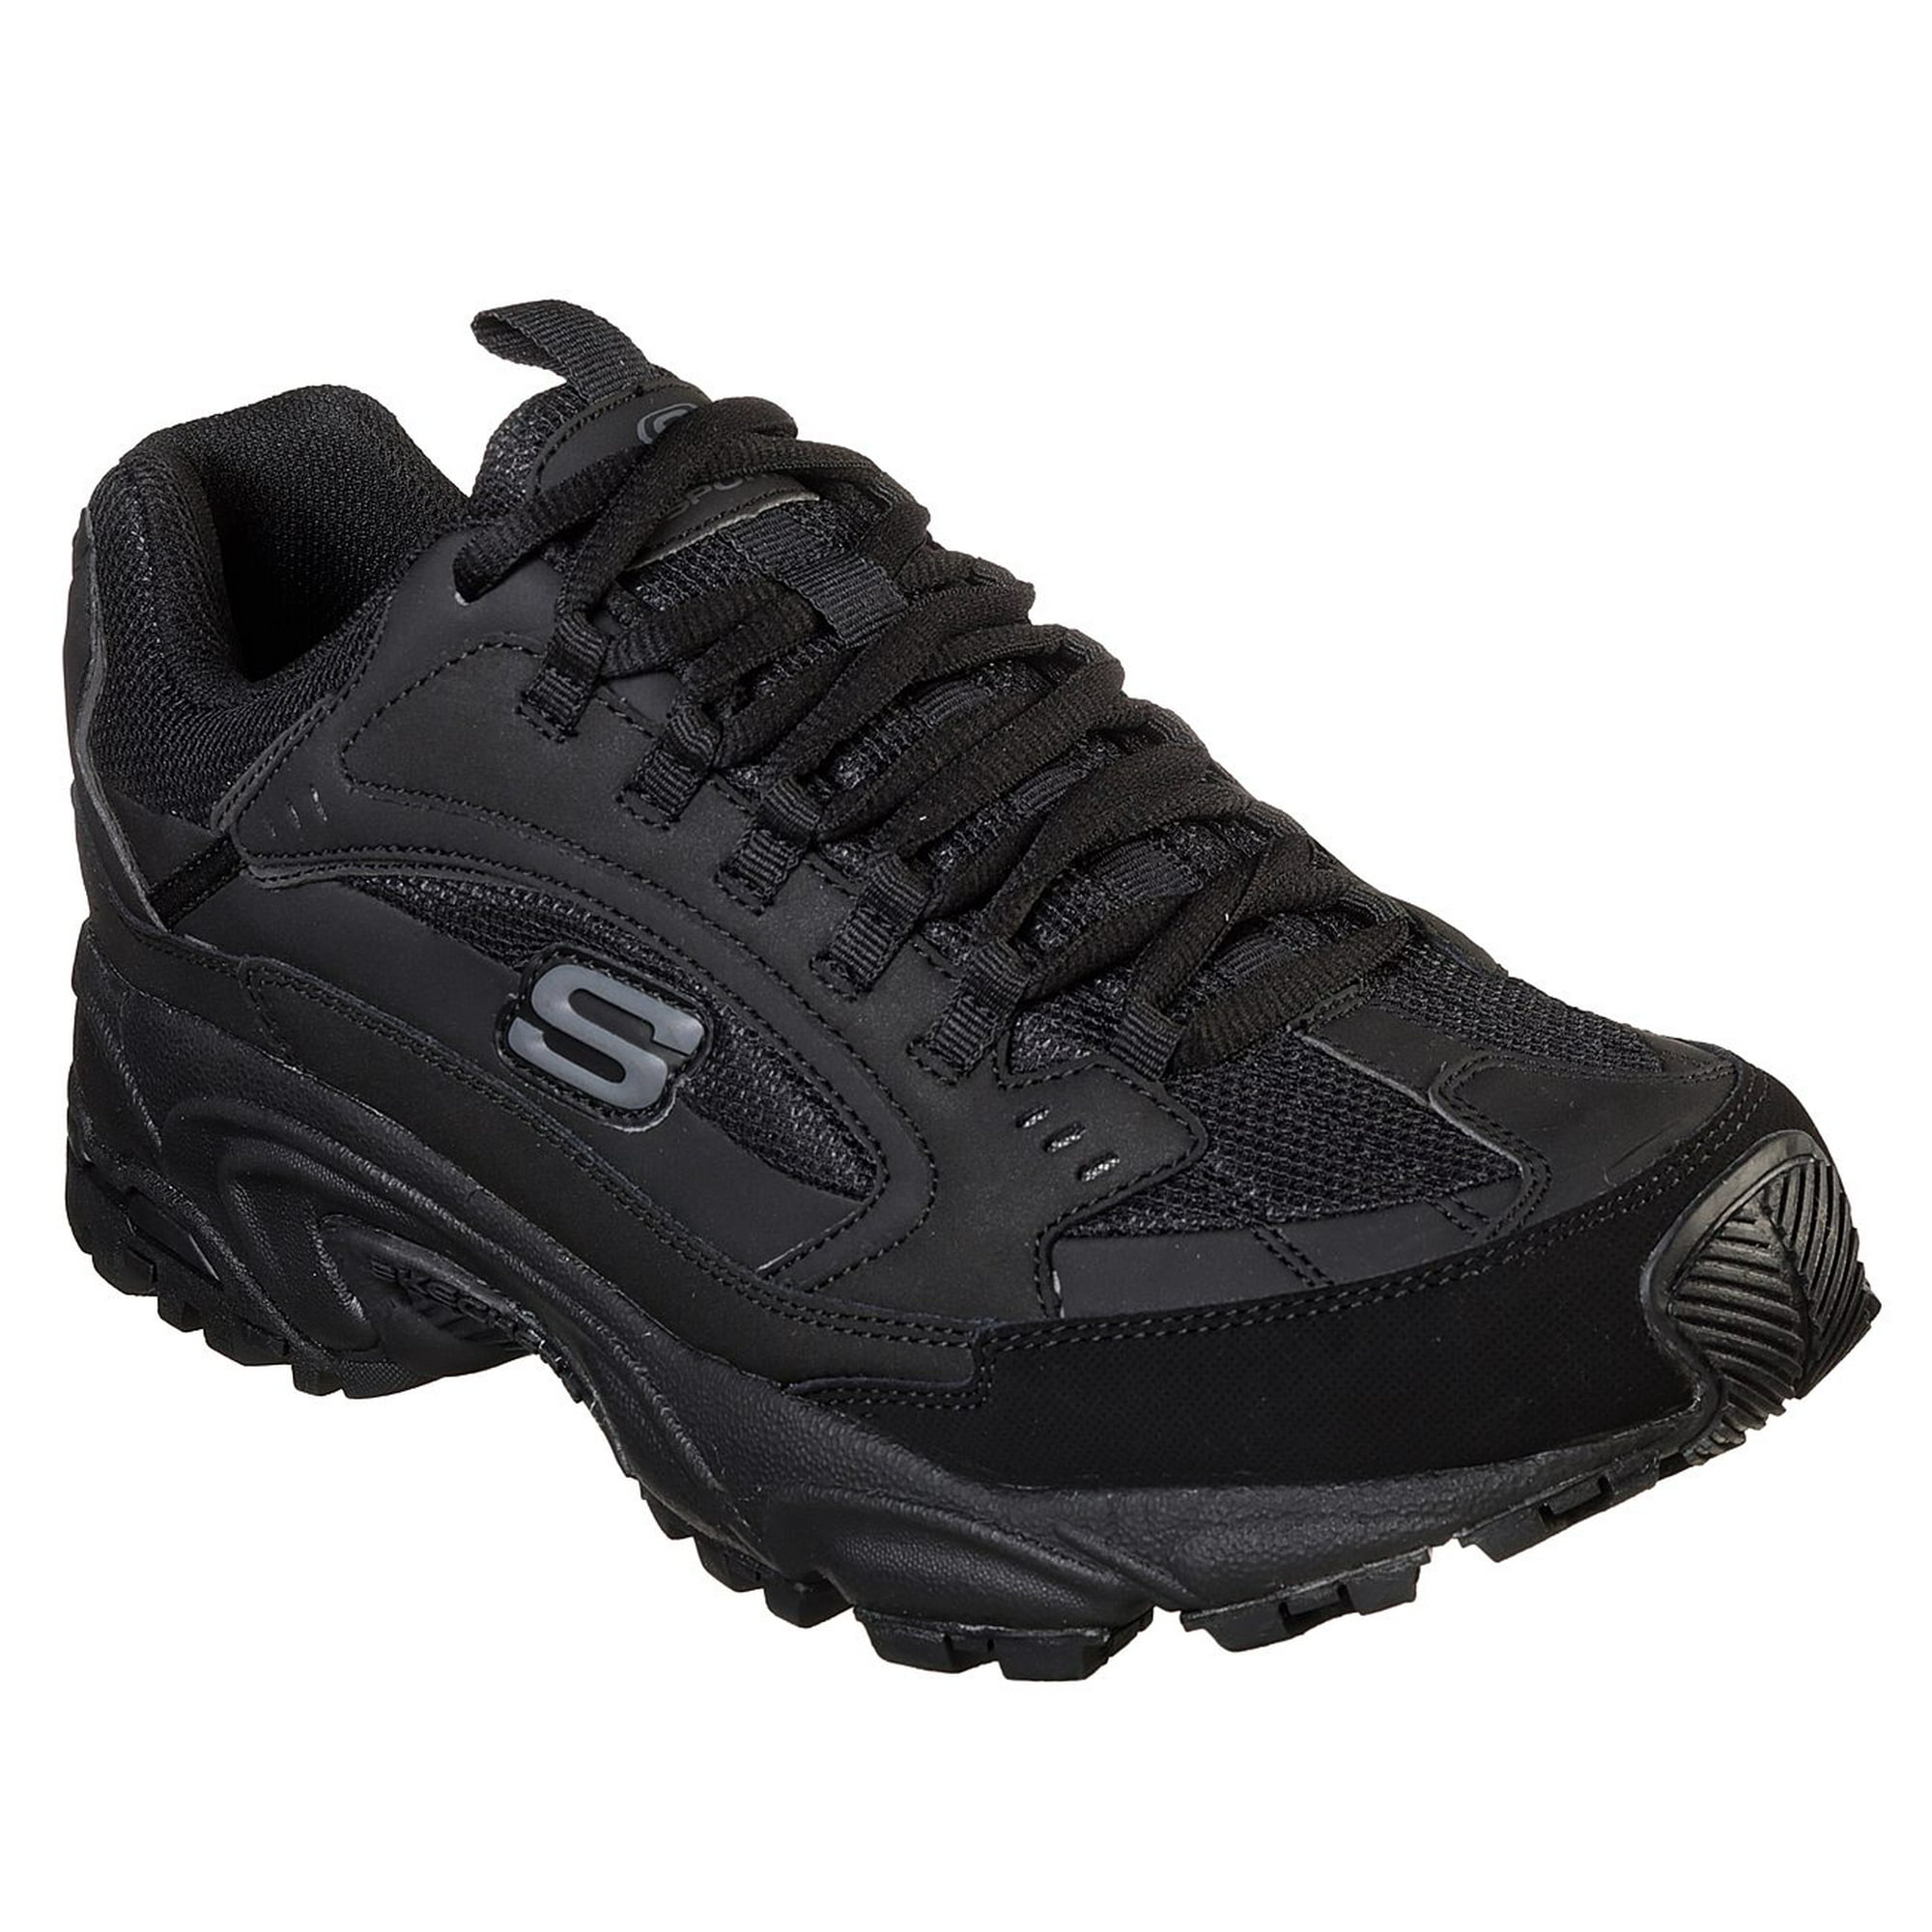 Skechers Sport Men's Stamina Nuovo Cutback Sneaker, Black/Black, 9.5 M US - Walmart.com